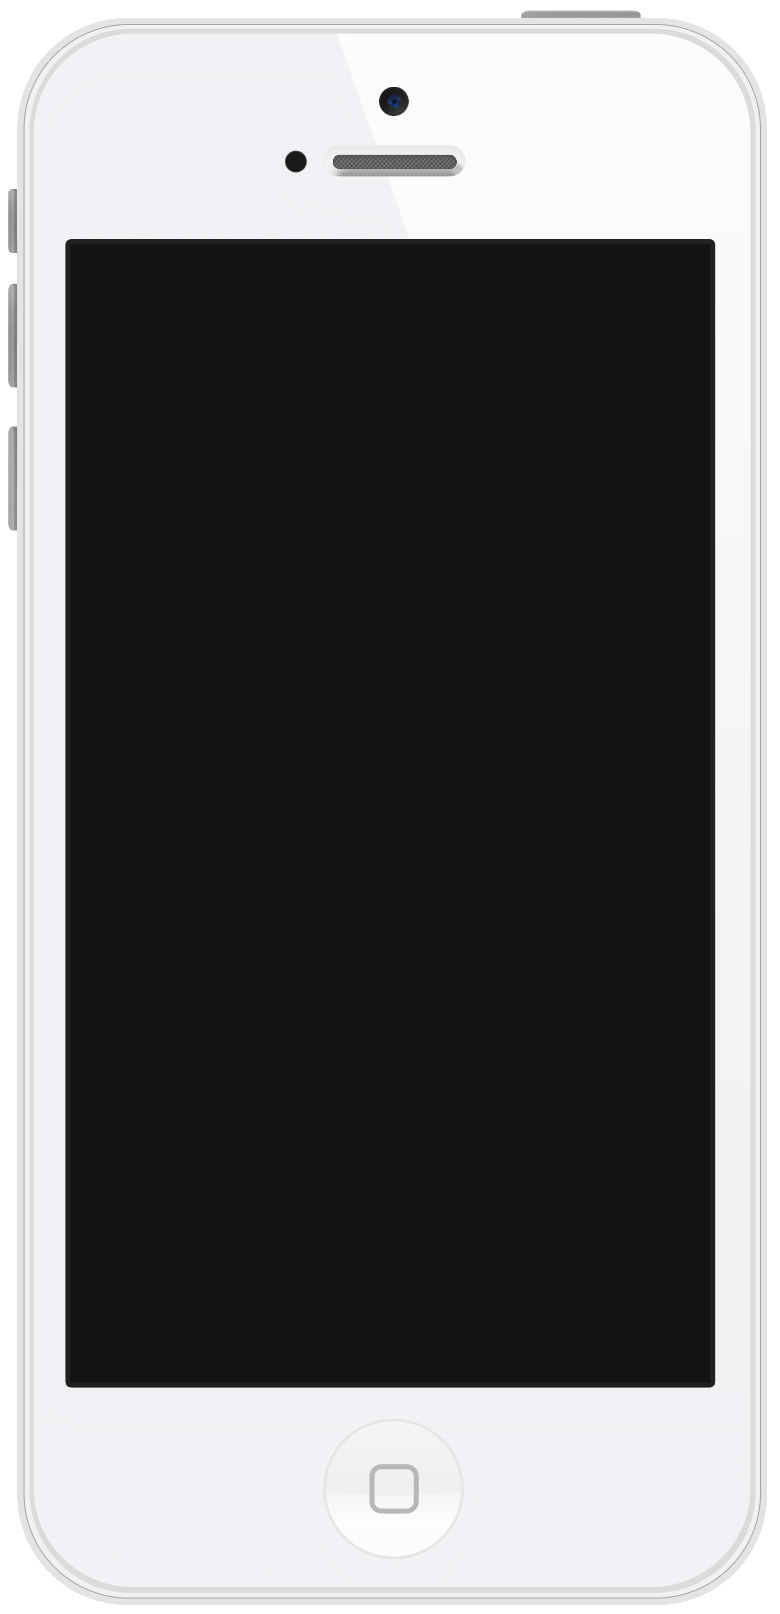 Portrait White Iphone icons